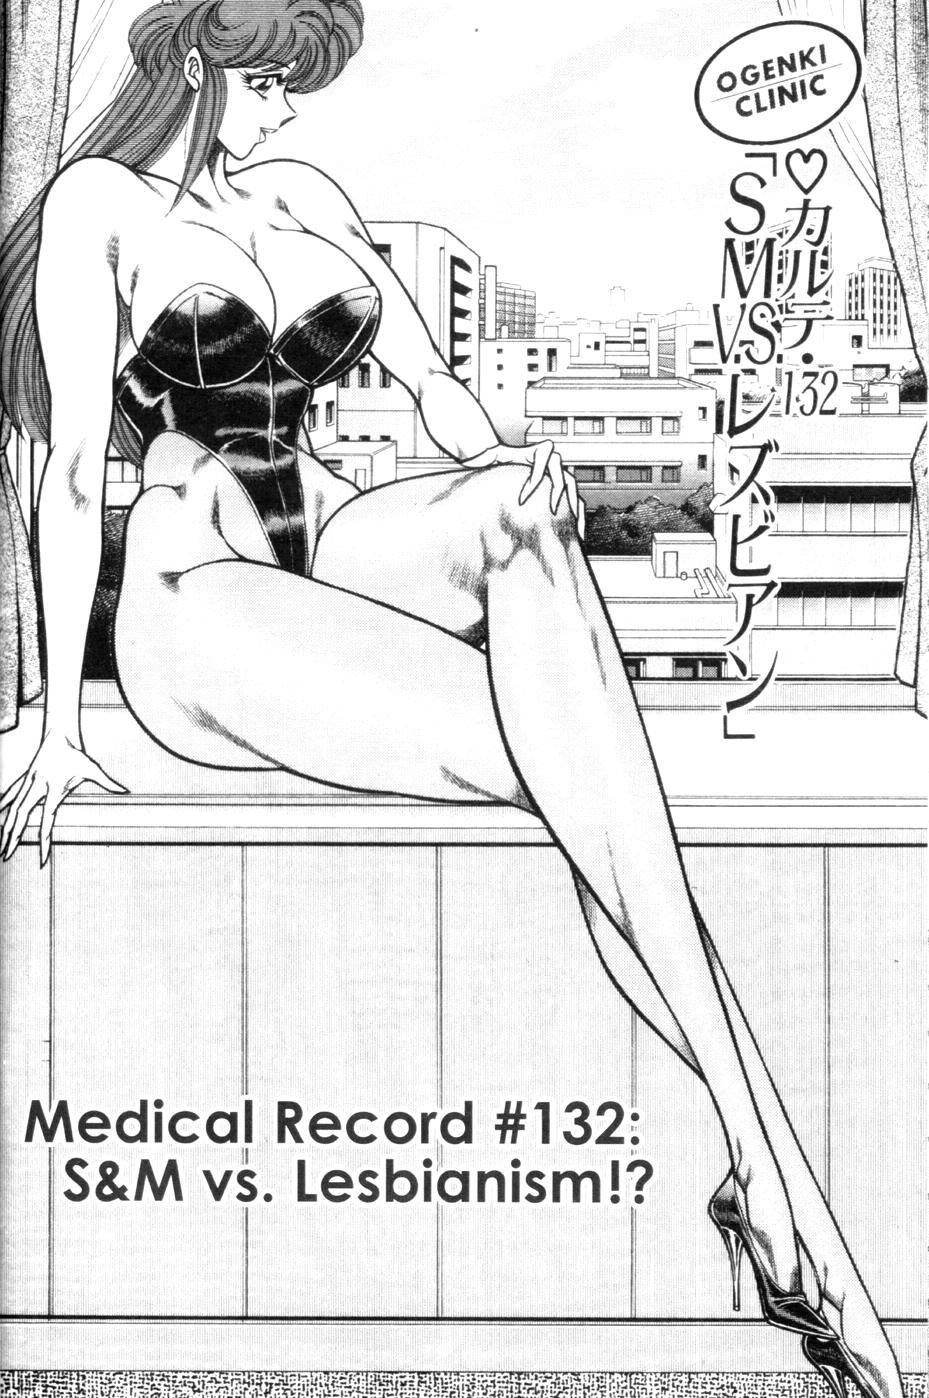 Ogenki Clinic Vol.9 175